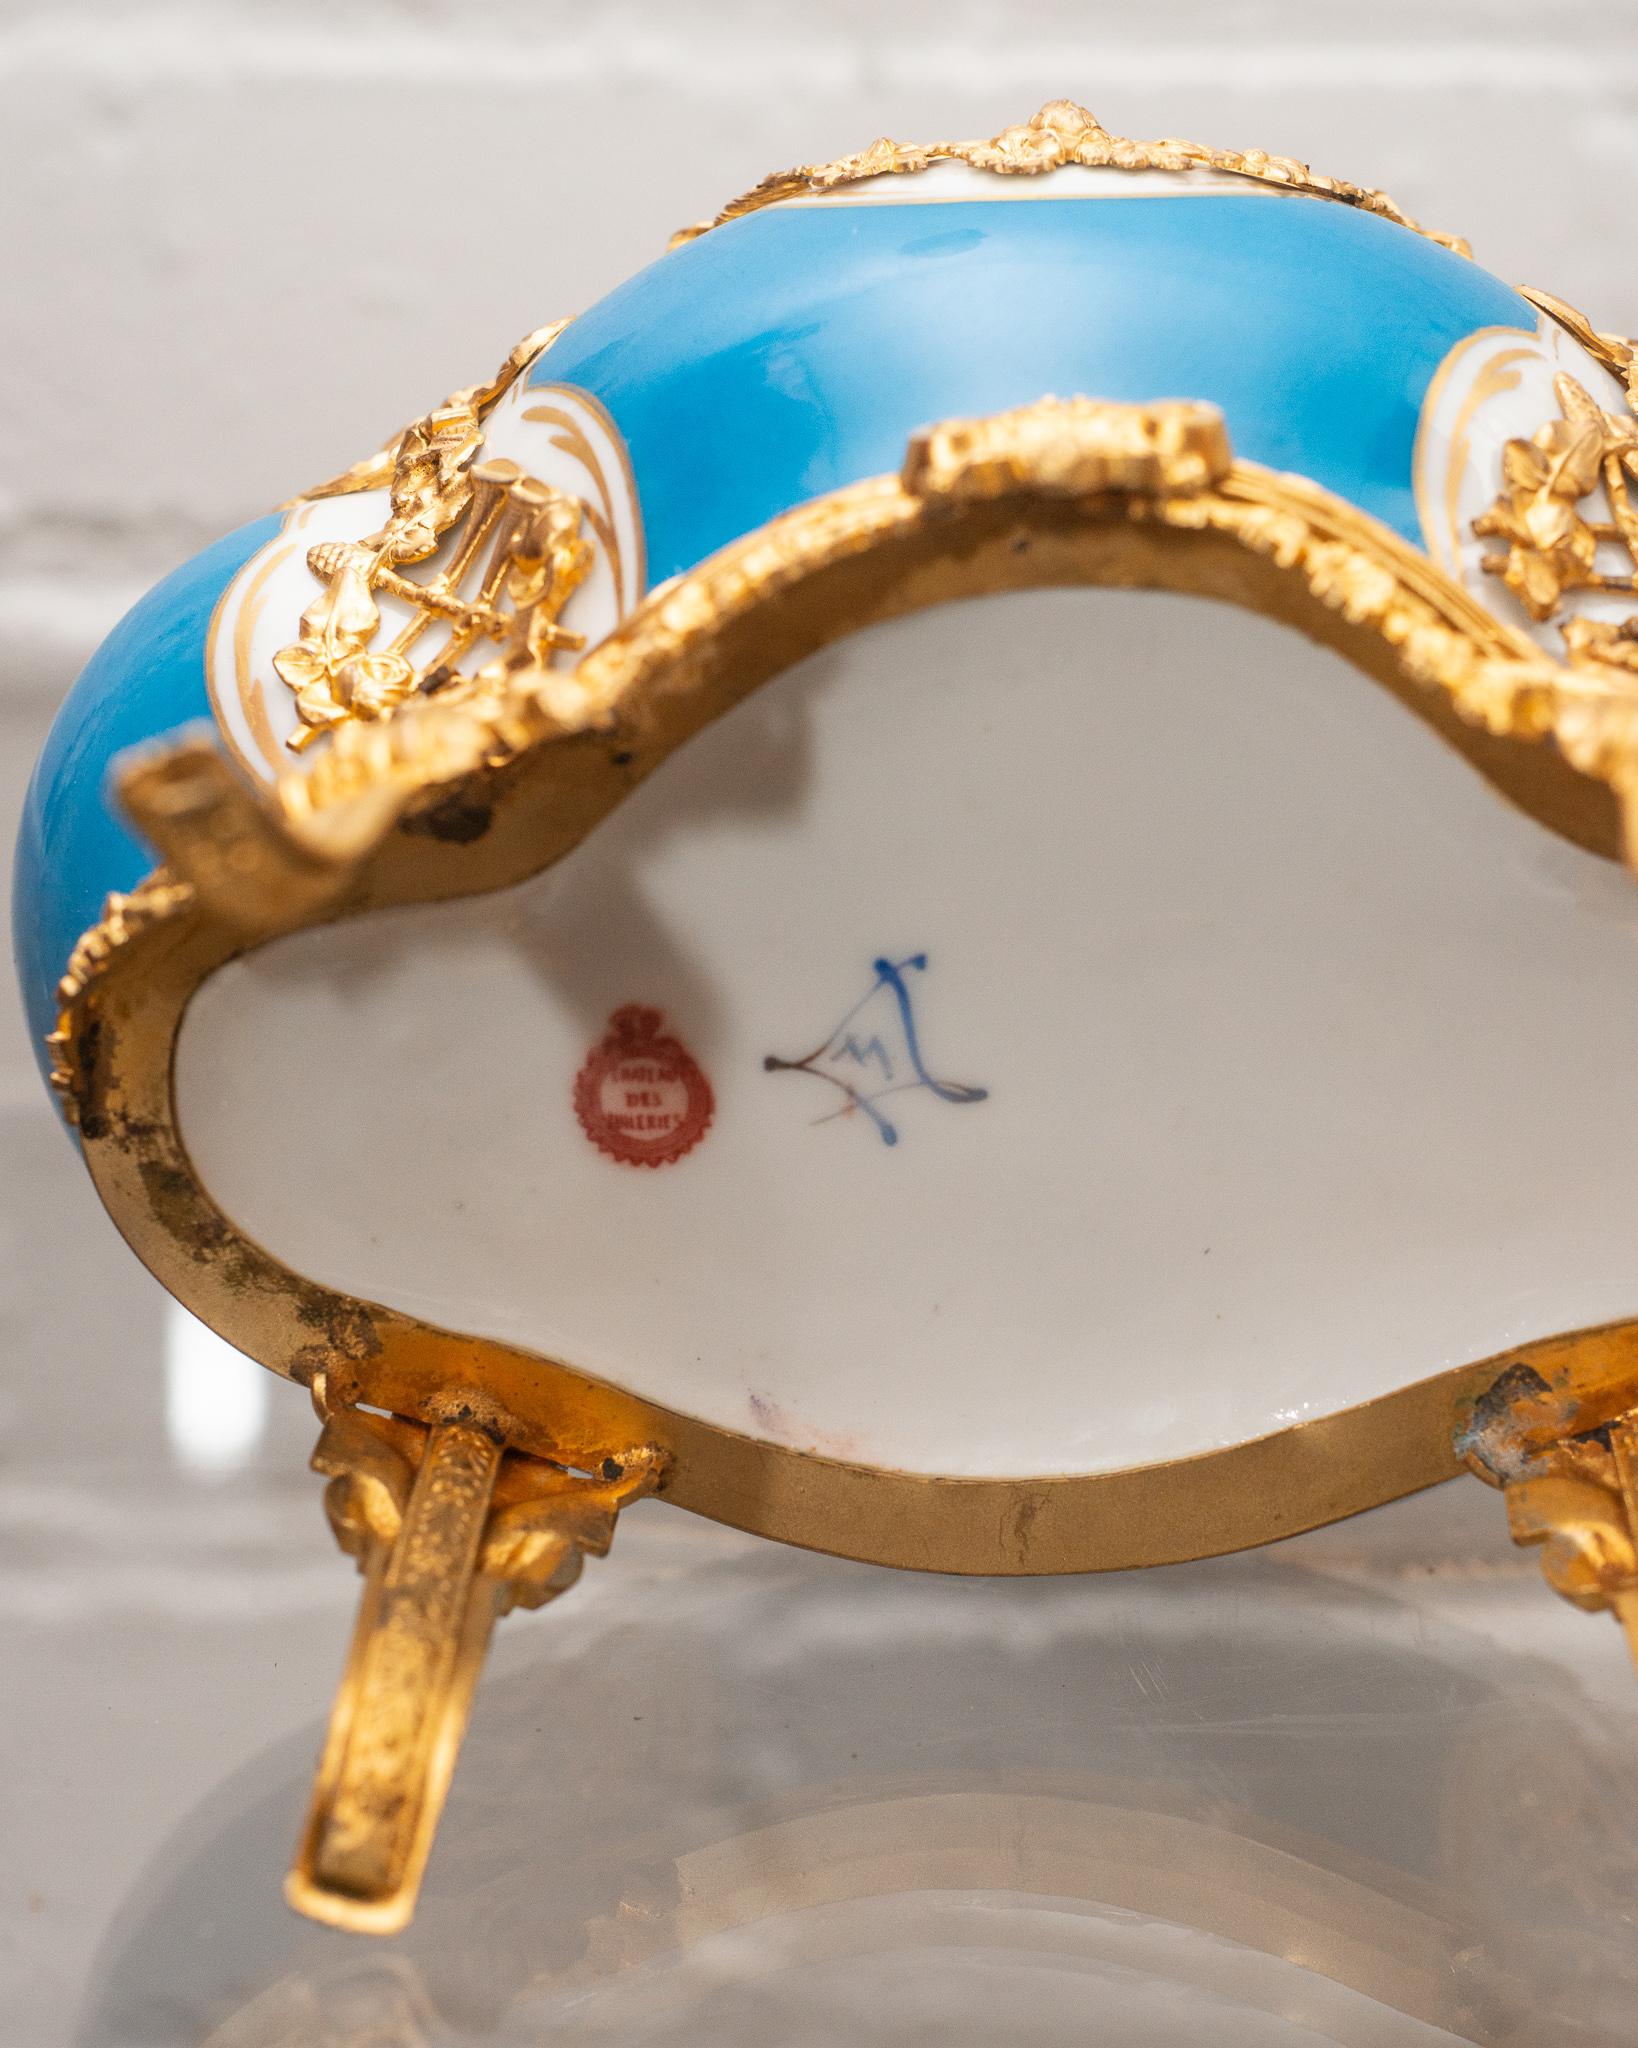 French Antique Sévres Bleu Celeste Porcelain Jewelry Casket with Gold Ormolu Details For Sale